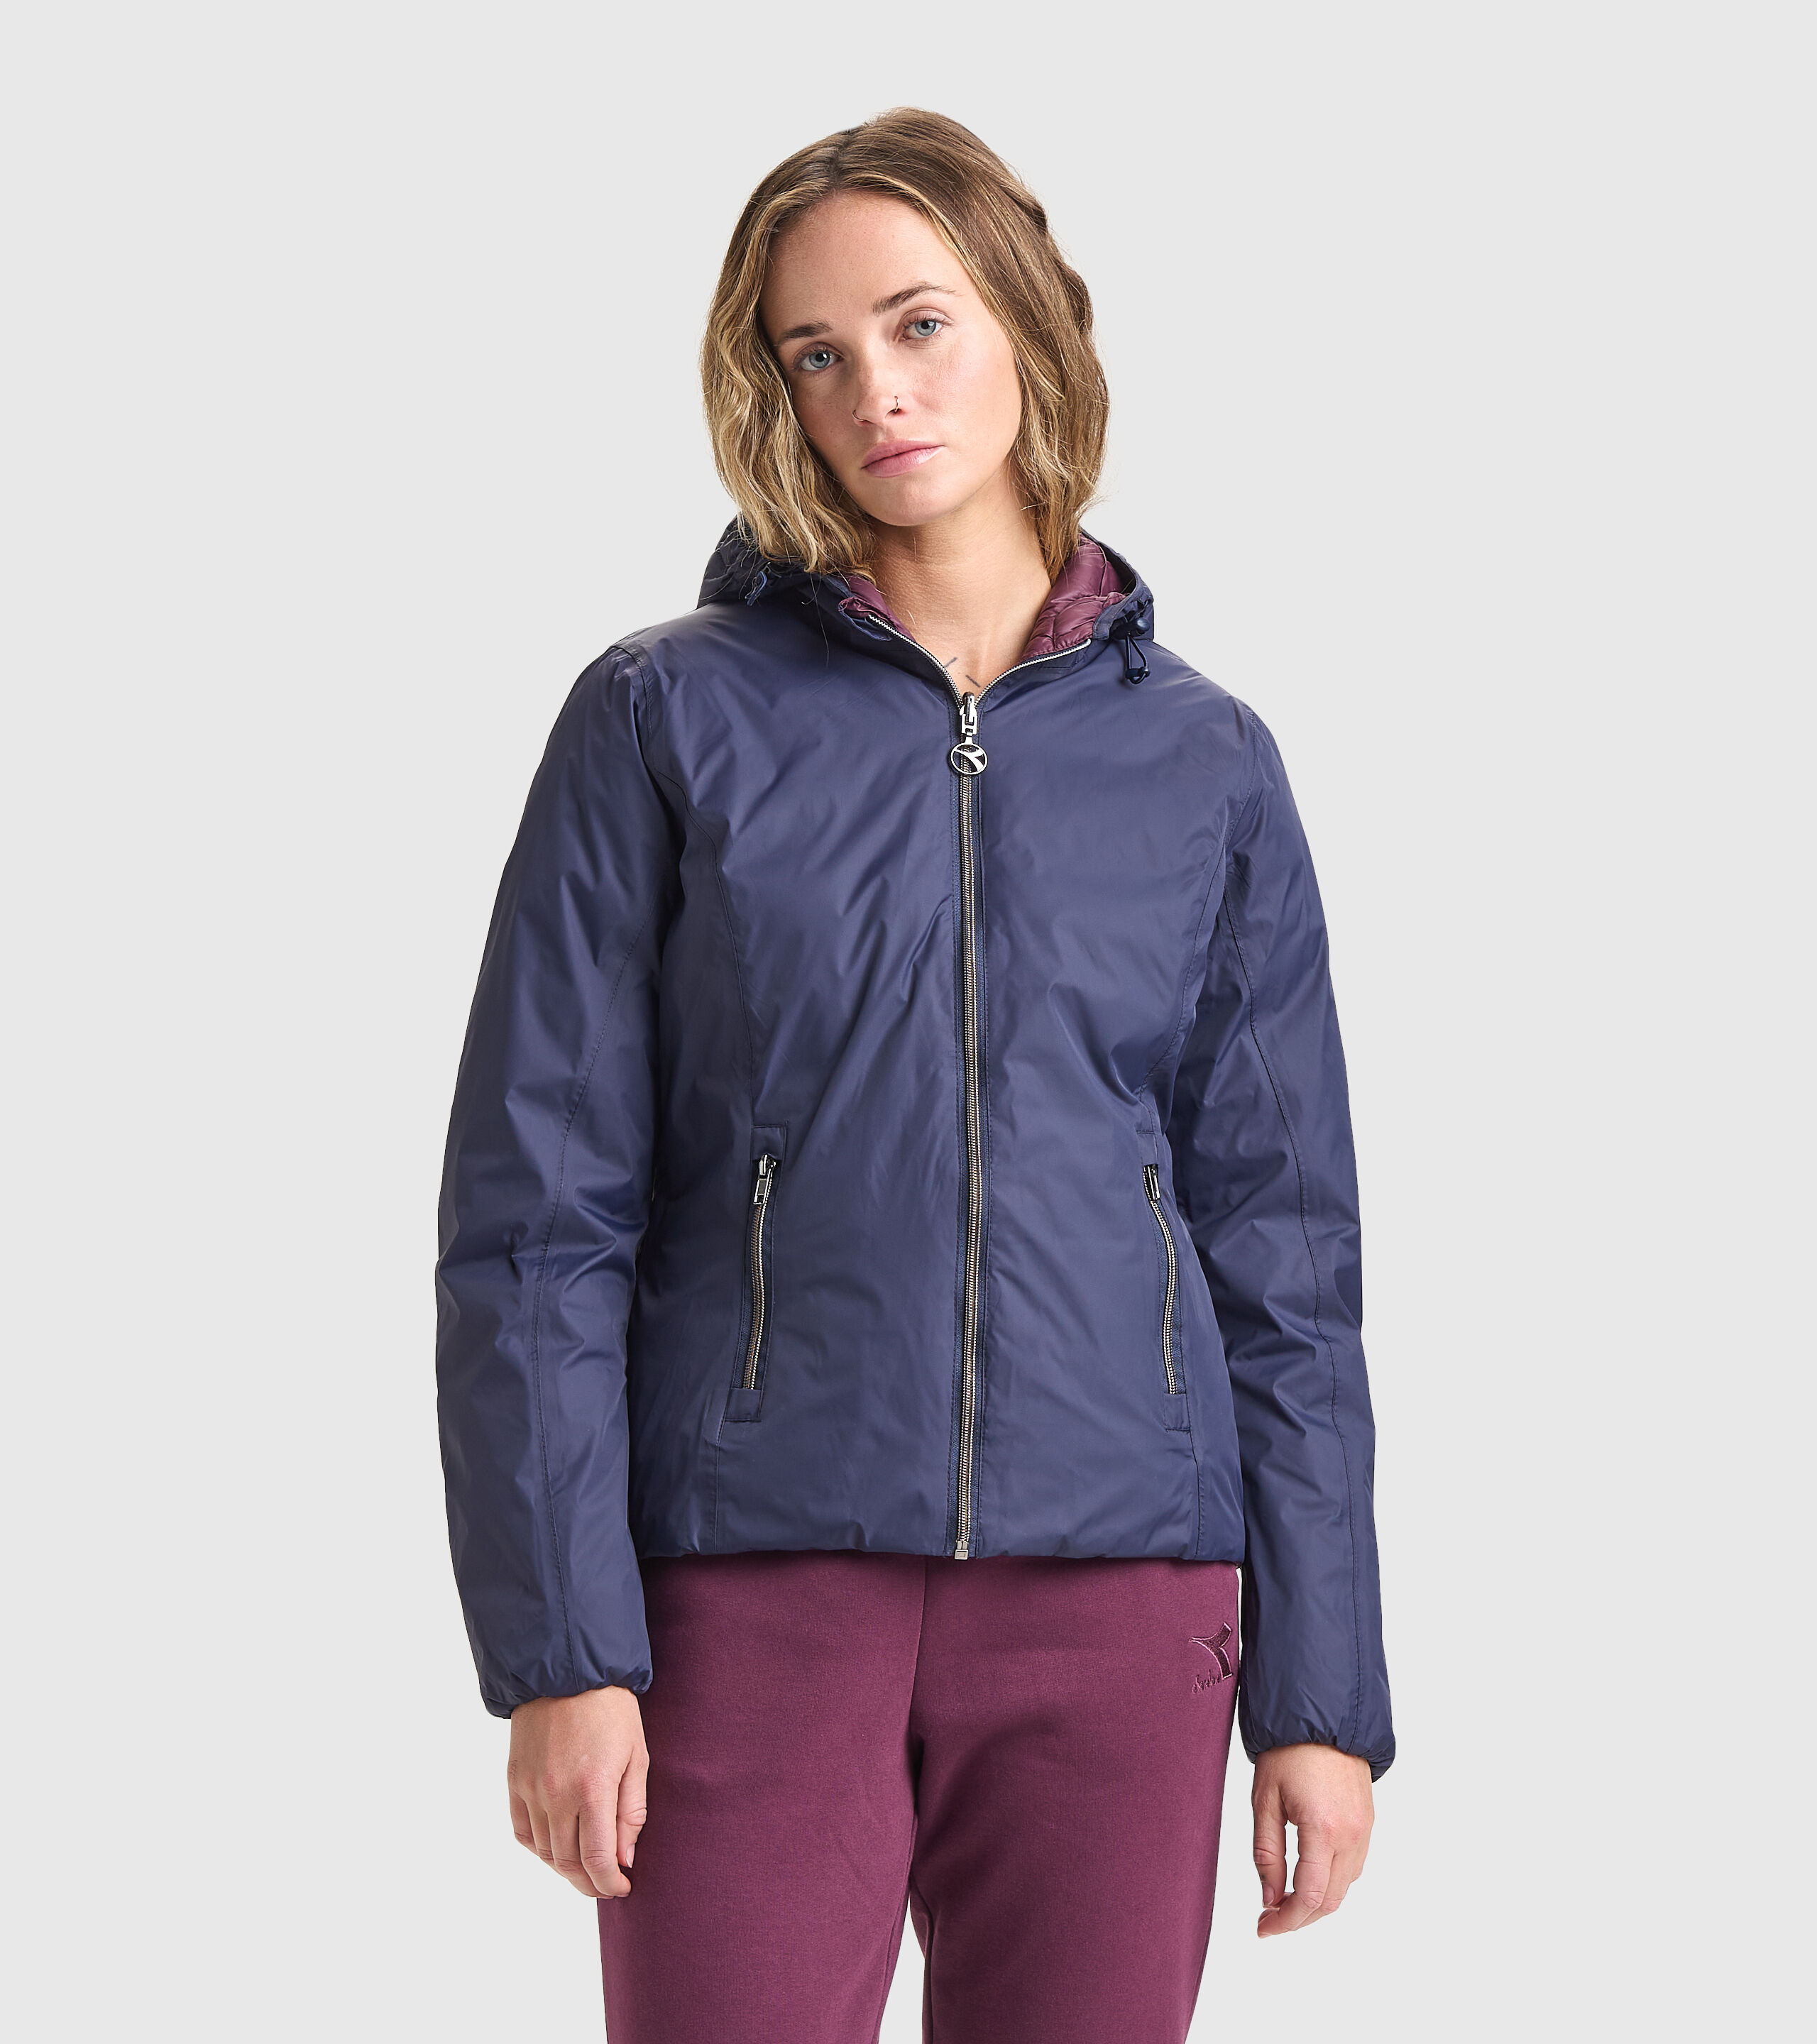 Women's Waterproof Jackets & Raincoats | John Lewis & Partners